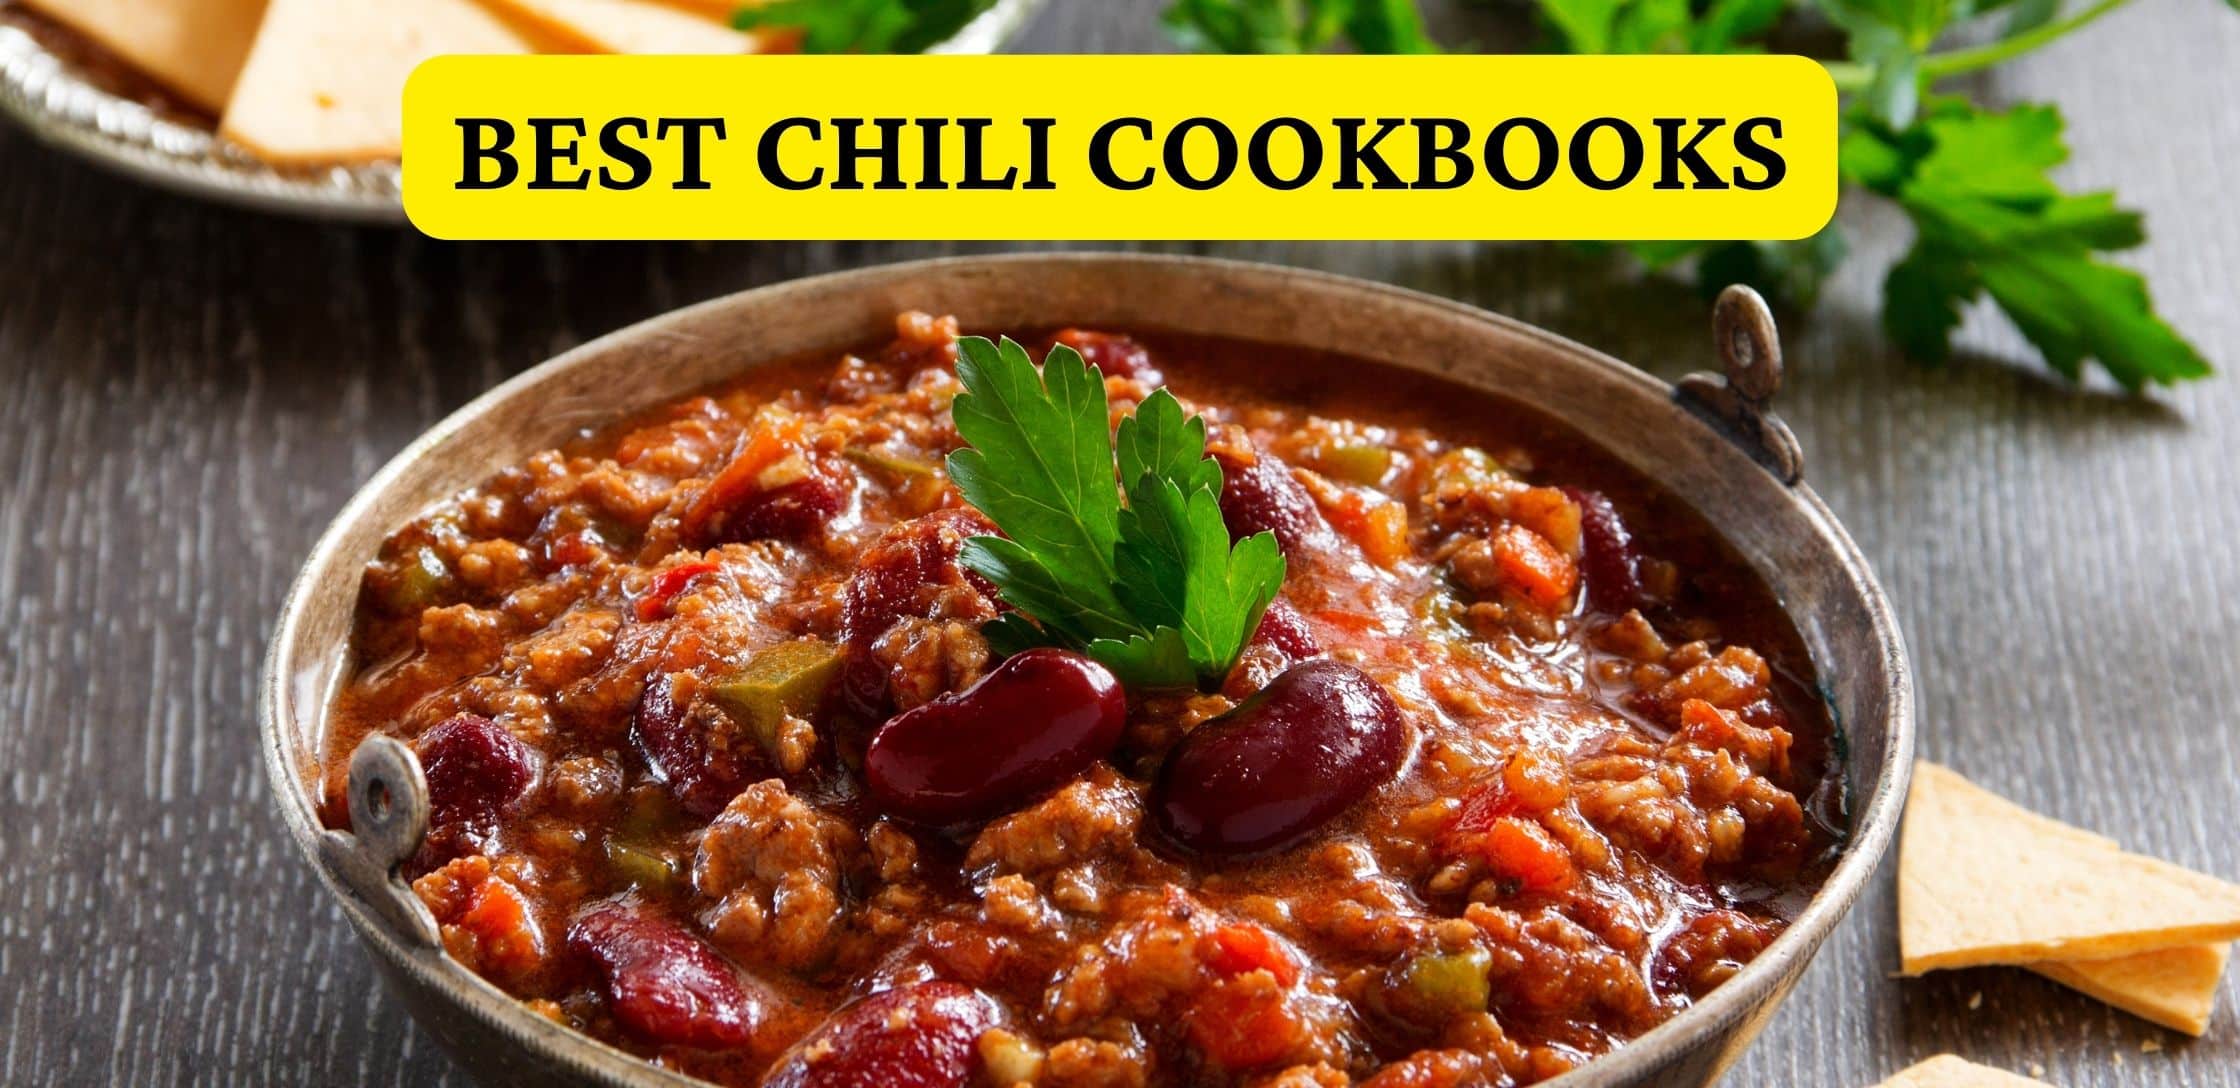 Best Chili Cookbooks